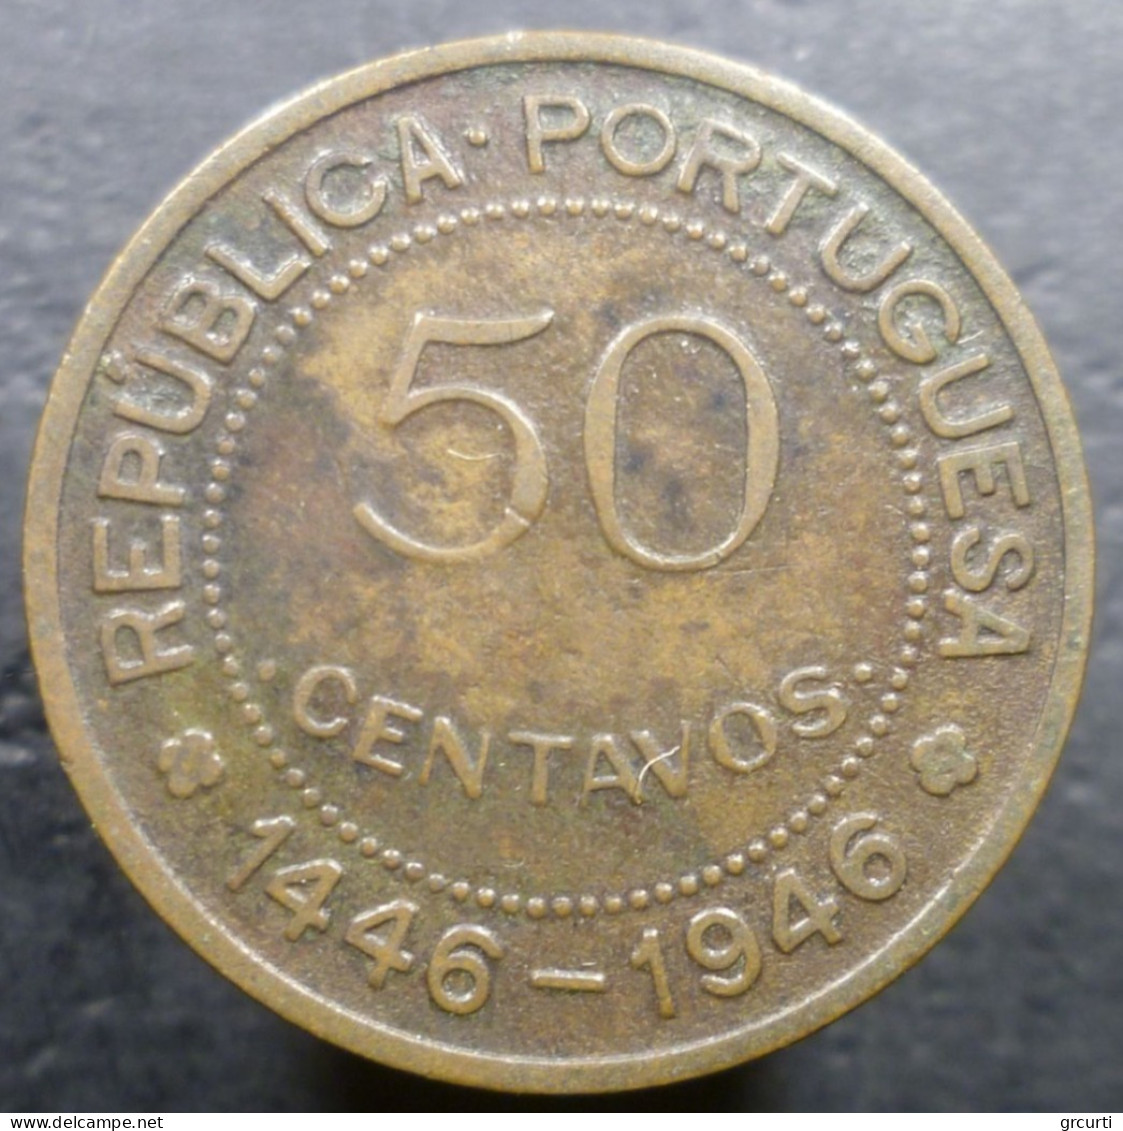 Guinea Bissau - 50 Centavos 1946 - 500° Della Scoperta - KM# 6 - Guinea-Bissau